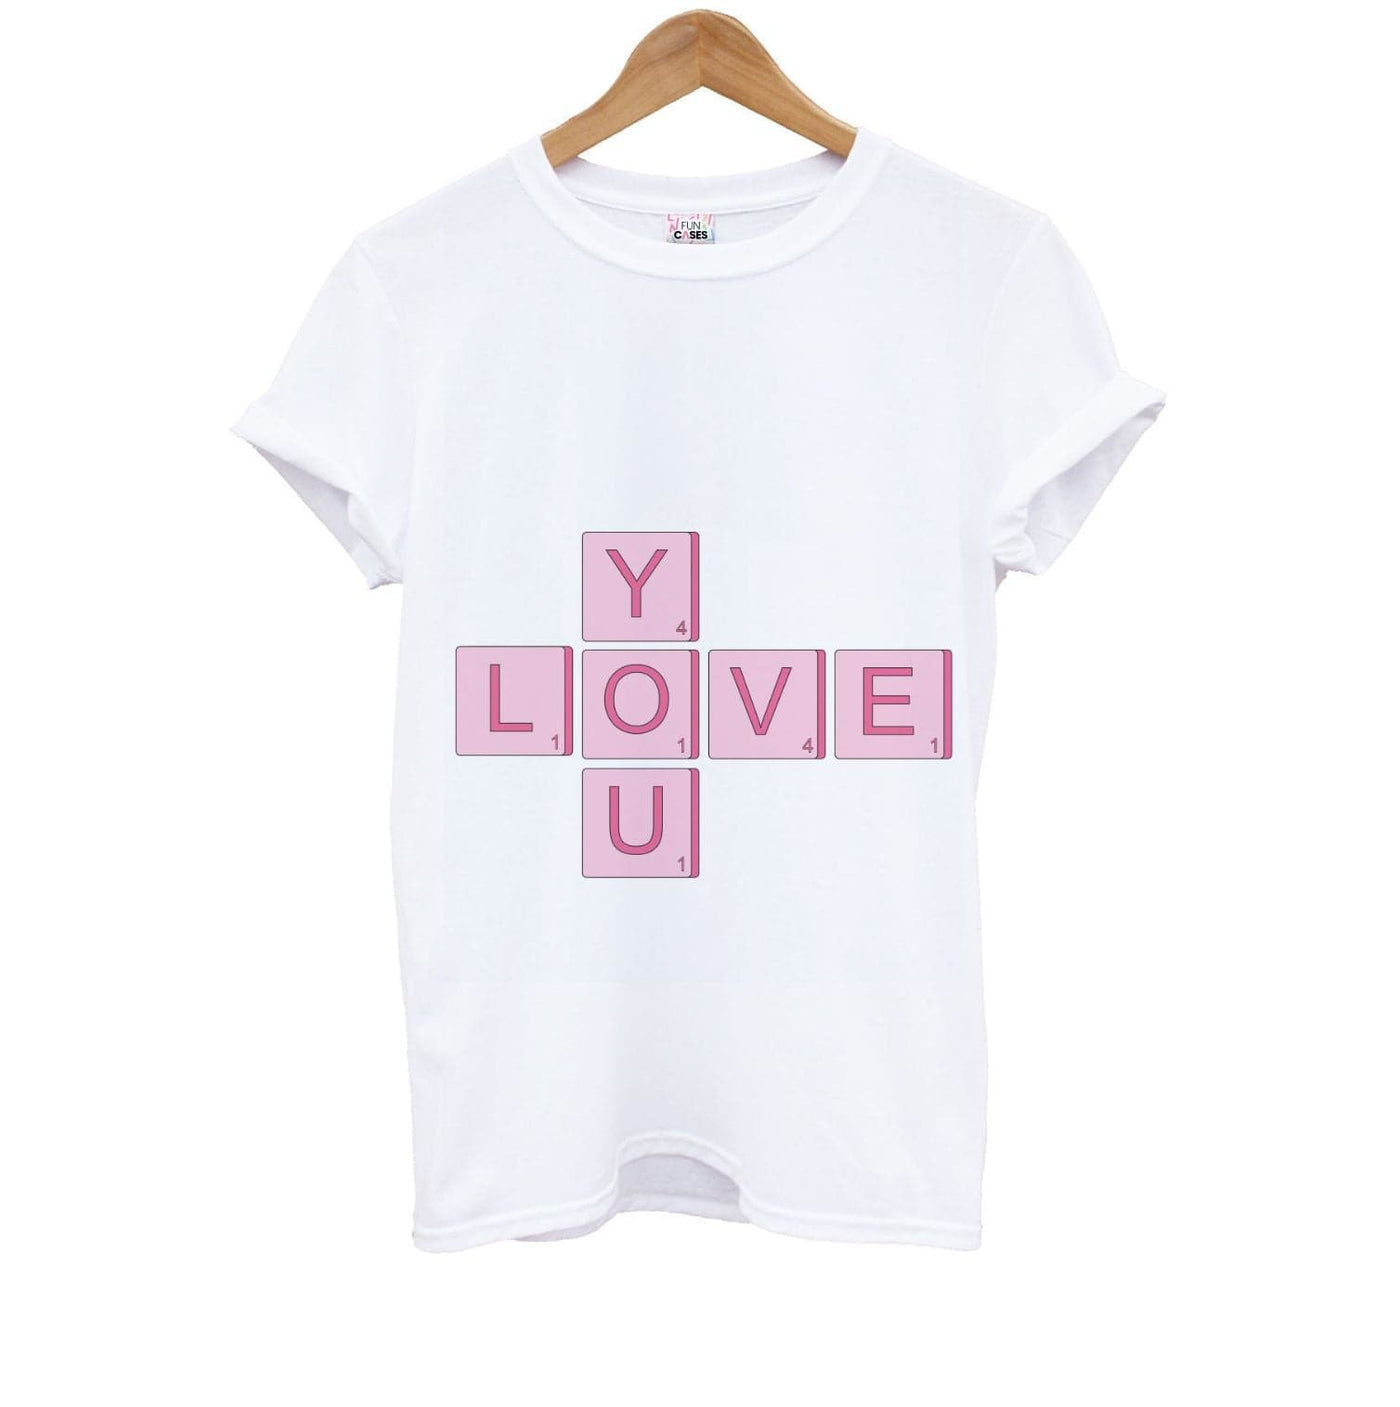 Love You - Valentine's Day Kids T-Shirt